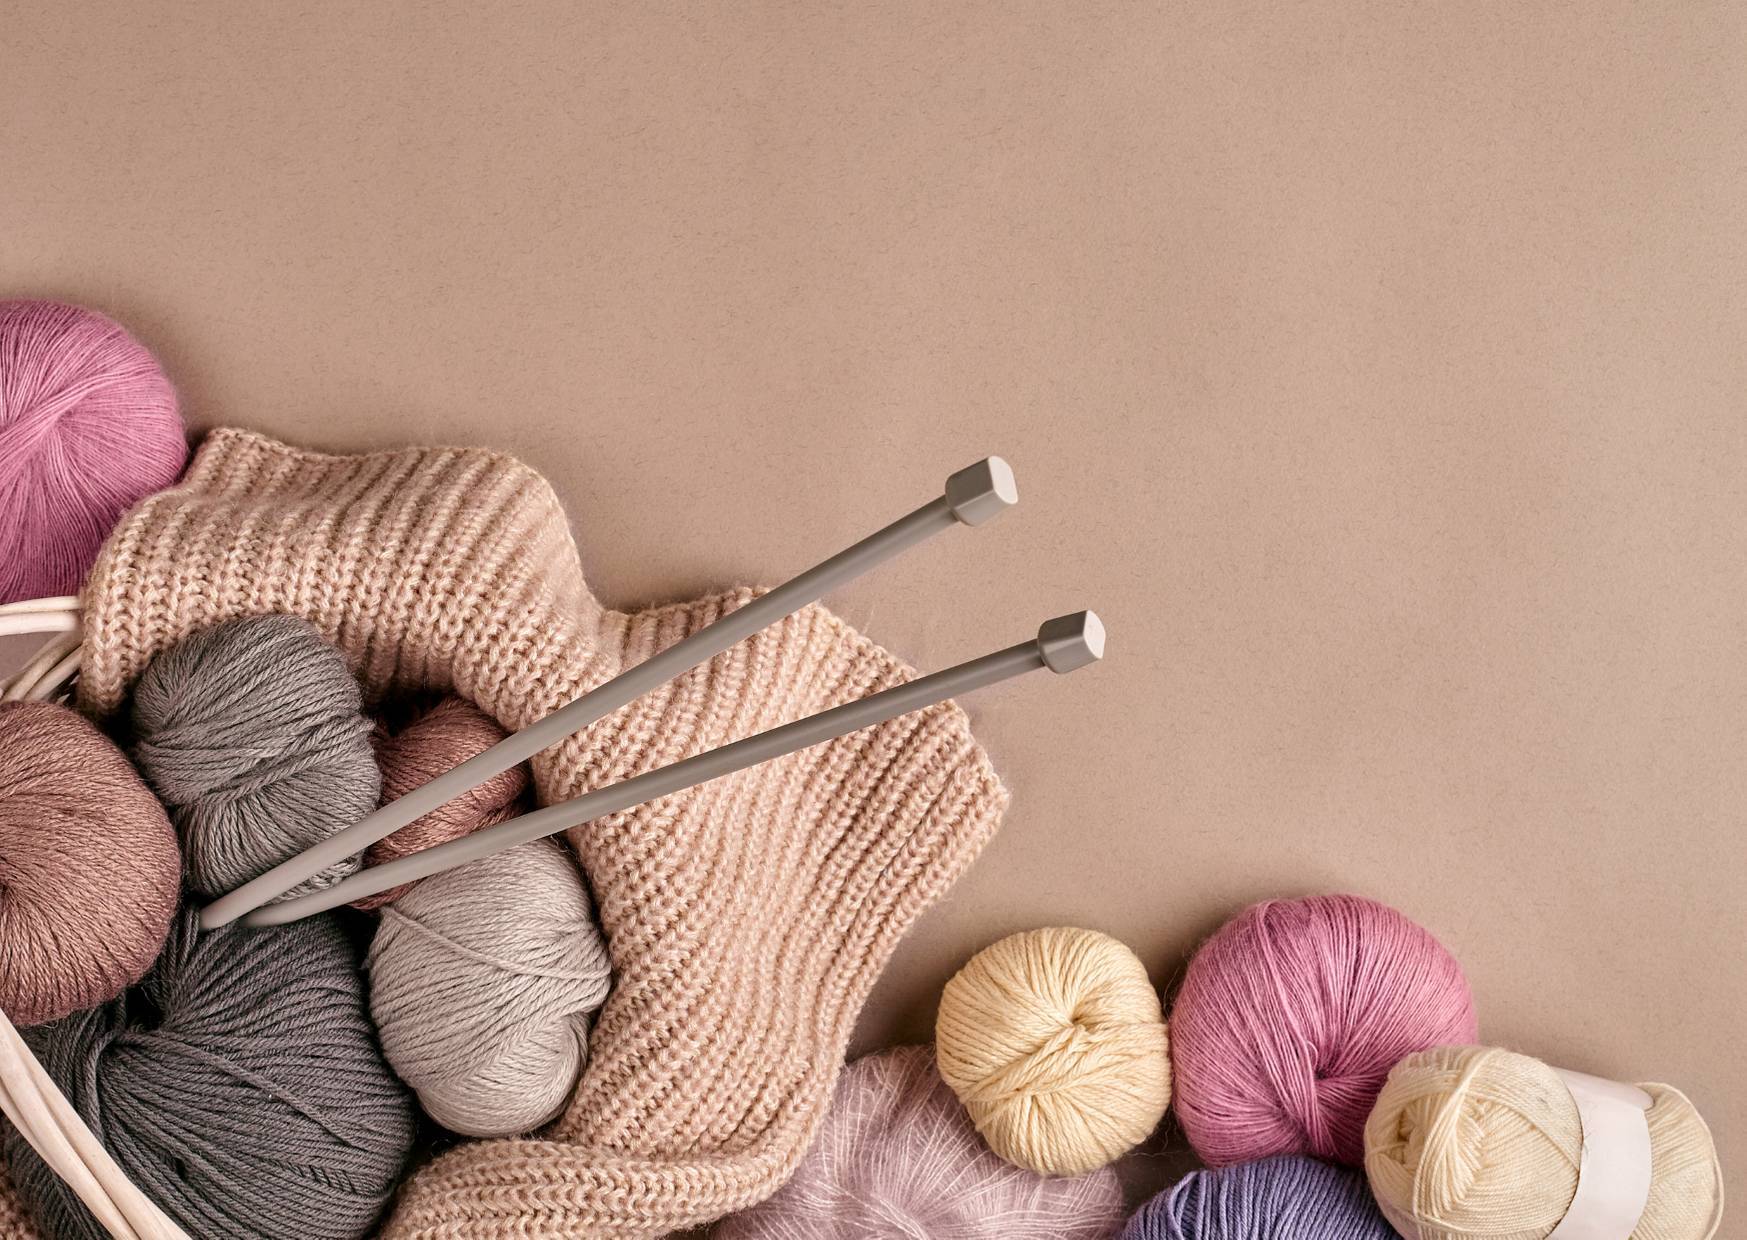 knitting as a hobby